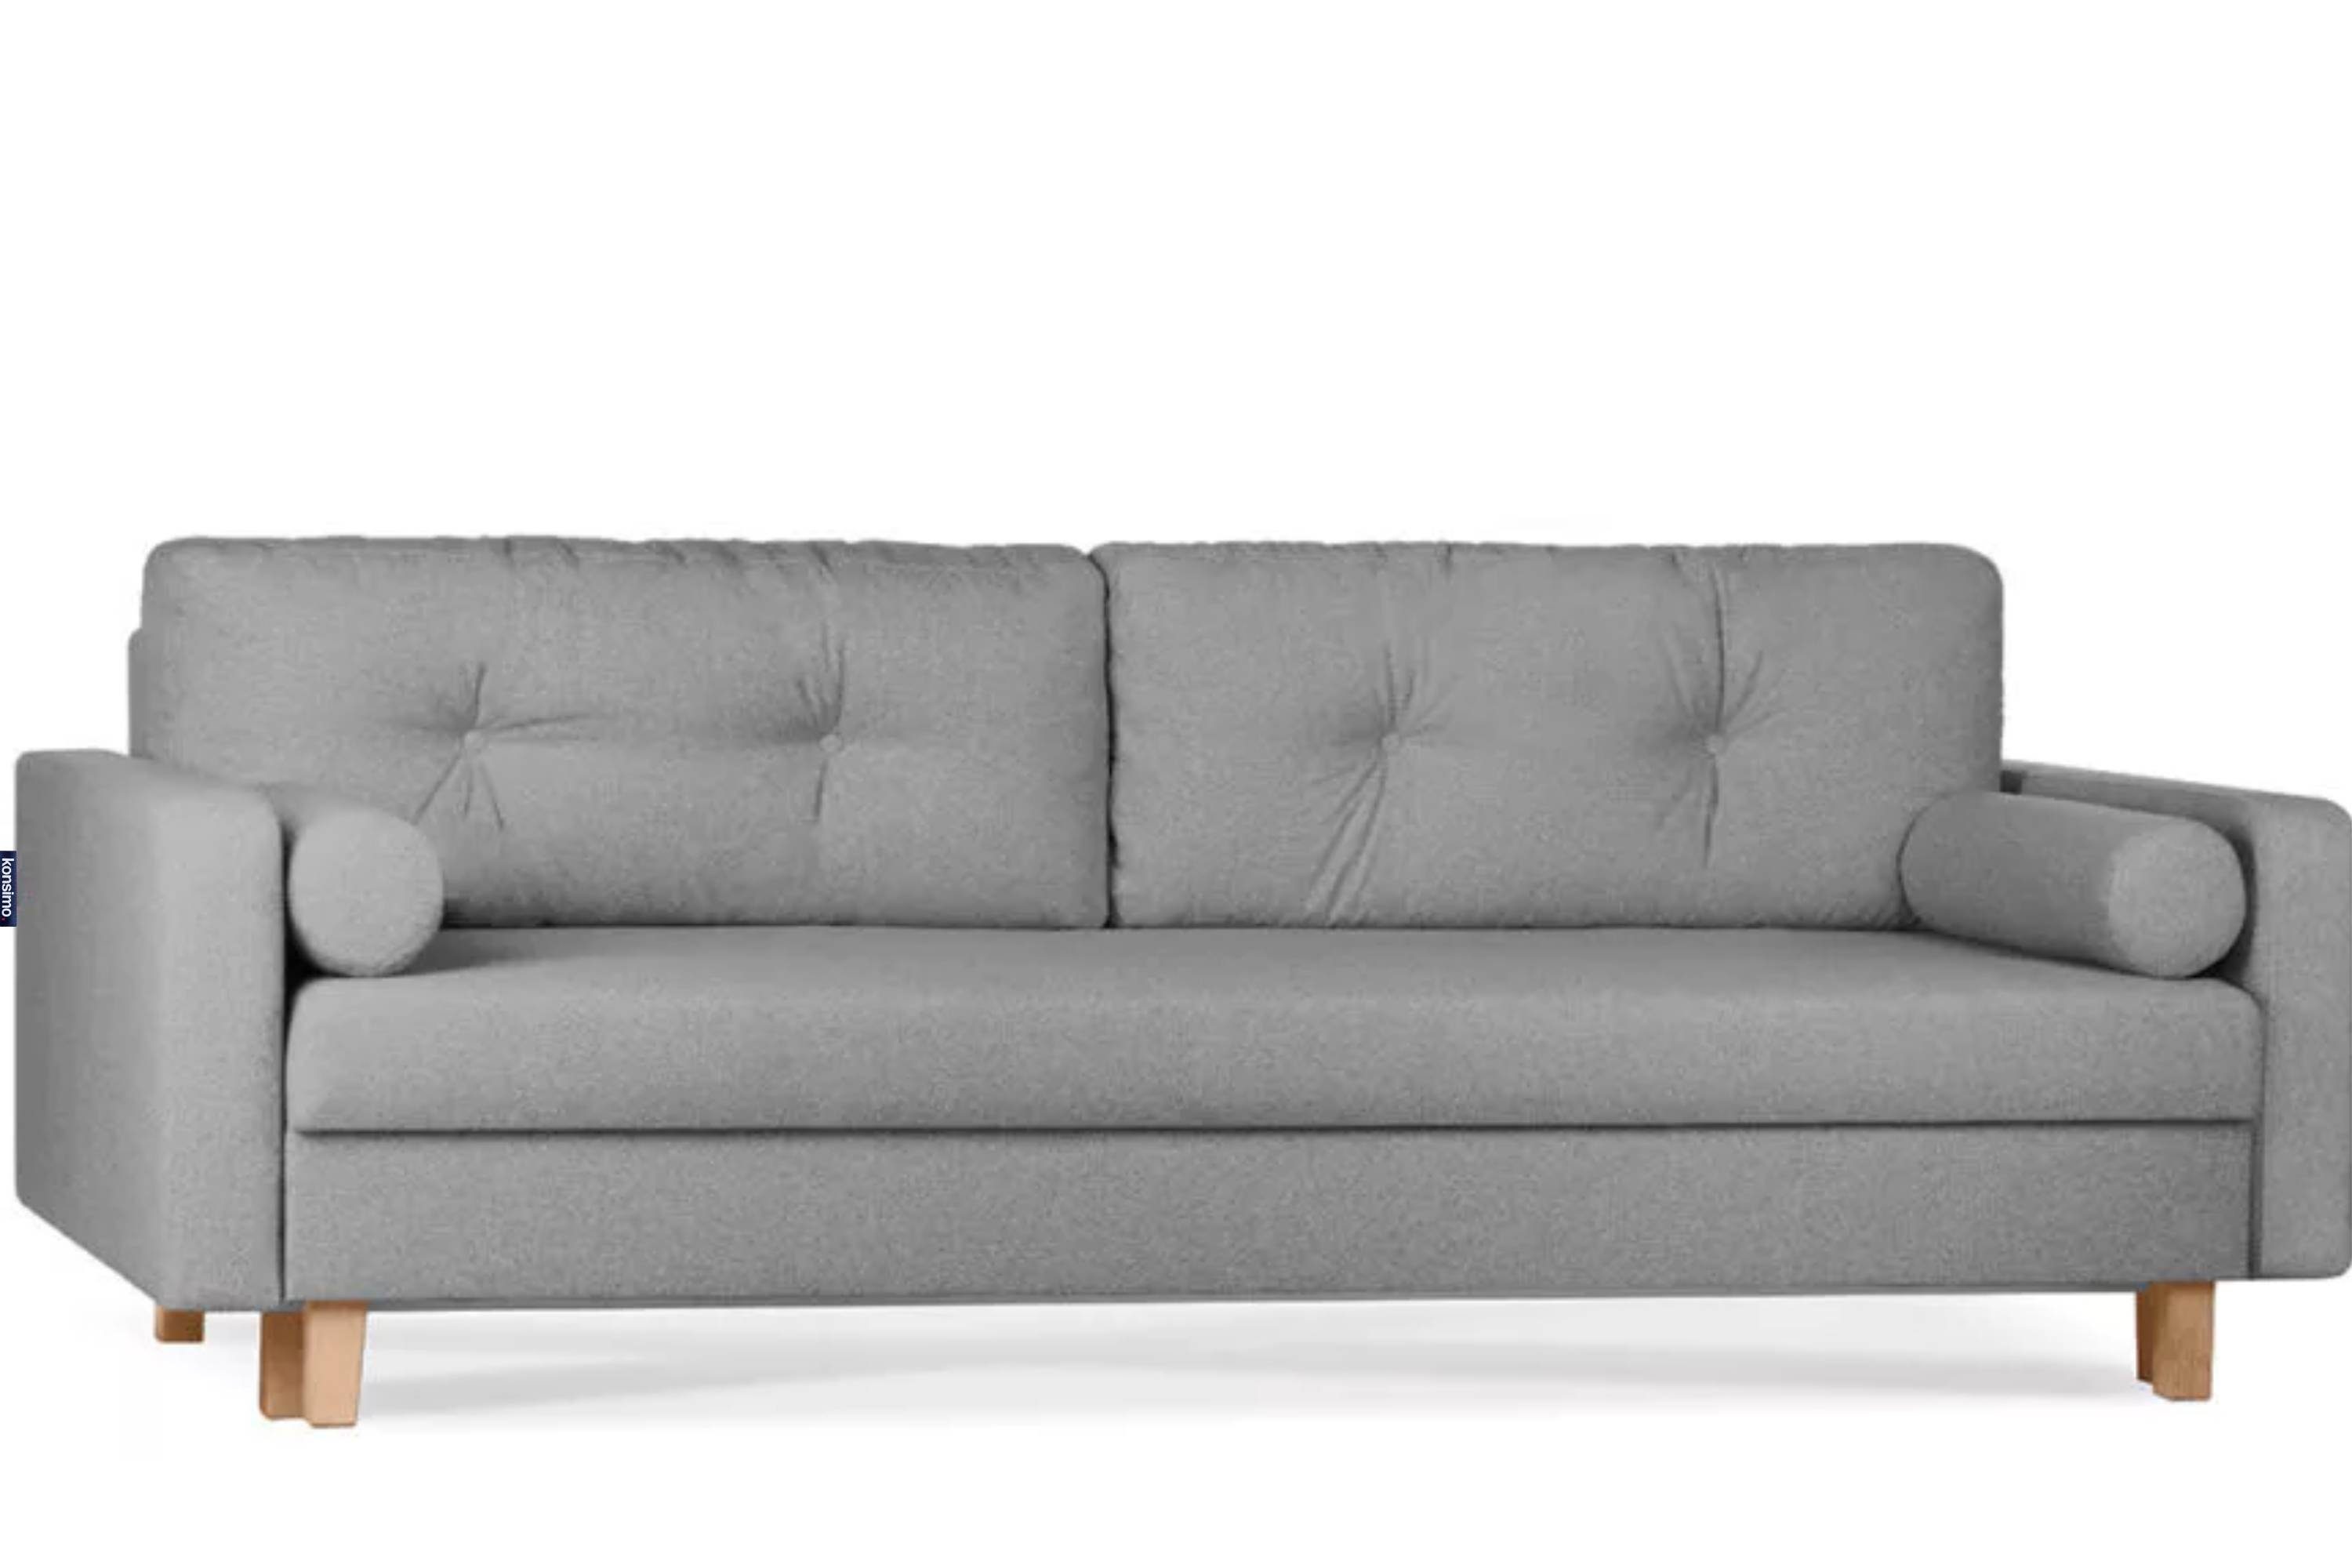 ERISO 3-Personen, Konsimo Sofa ausziehbare 196x150 cm Liegfläche Schlafsofa